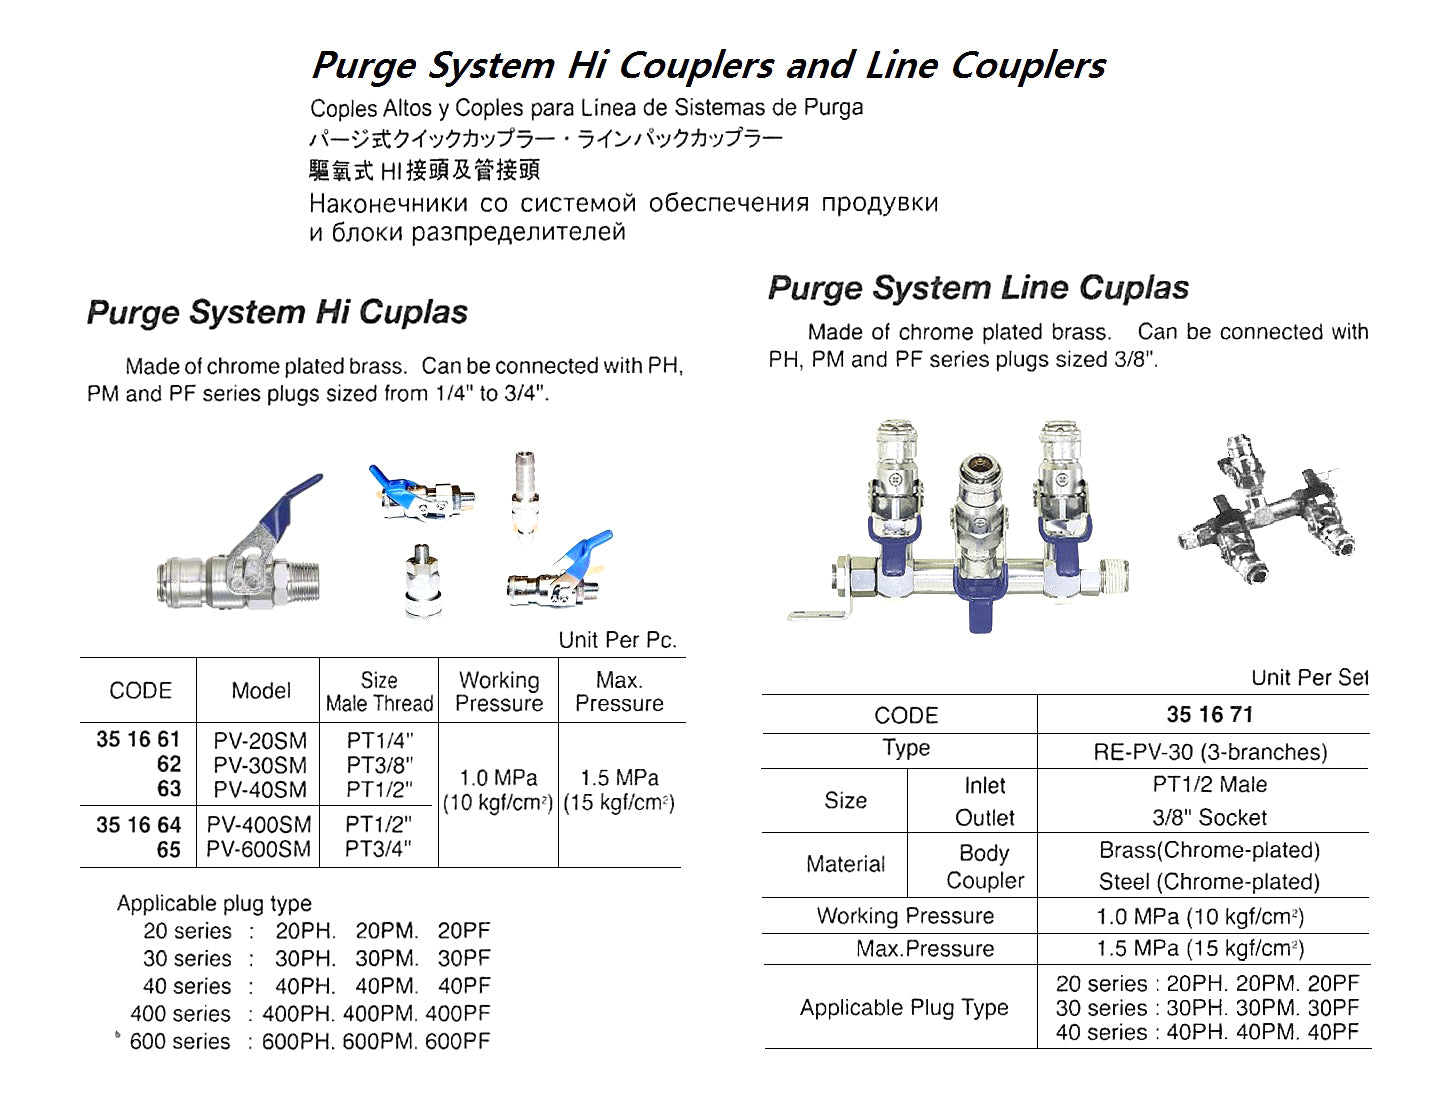 351662-HI COUPLER PURGE SYSTEM, PV-30SM MALE R3/8?